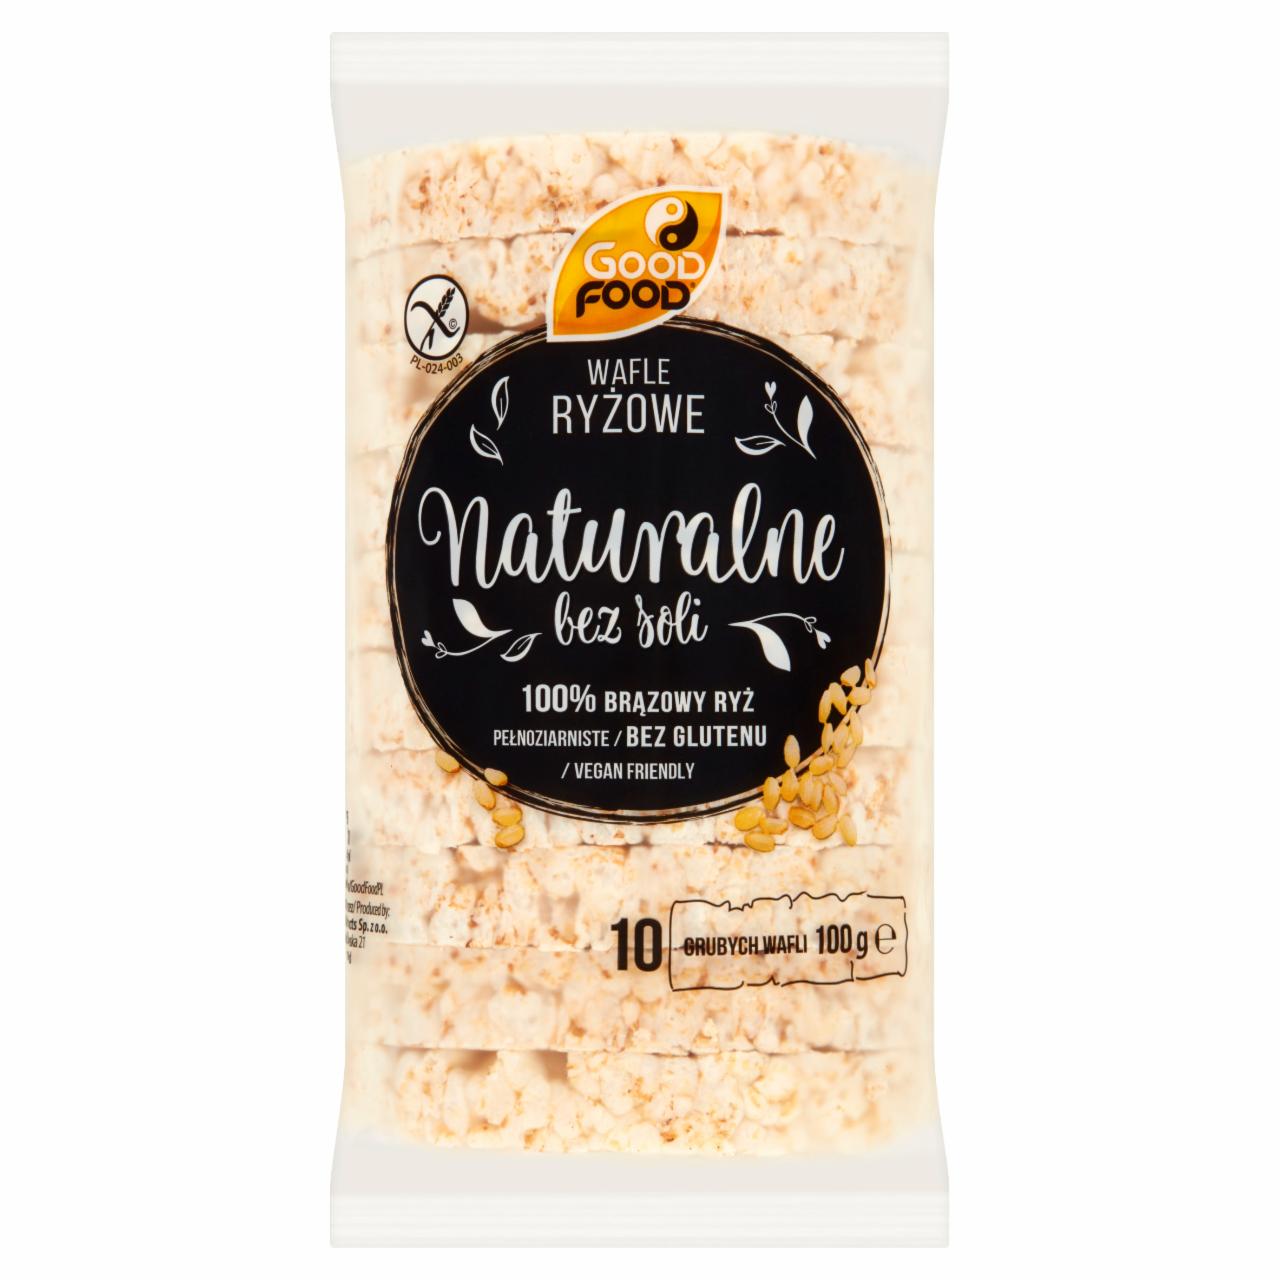 Zdjęcia - Good Food Wafle ryżowe naturalne 100 g (10 sztuk)